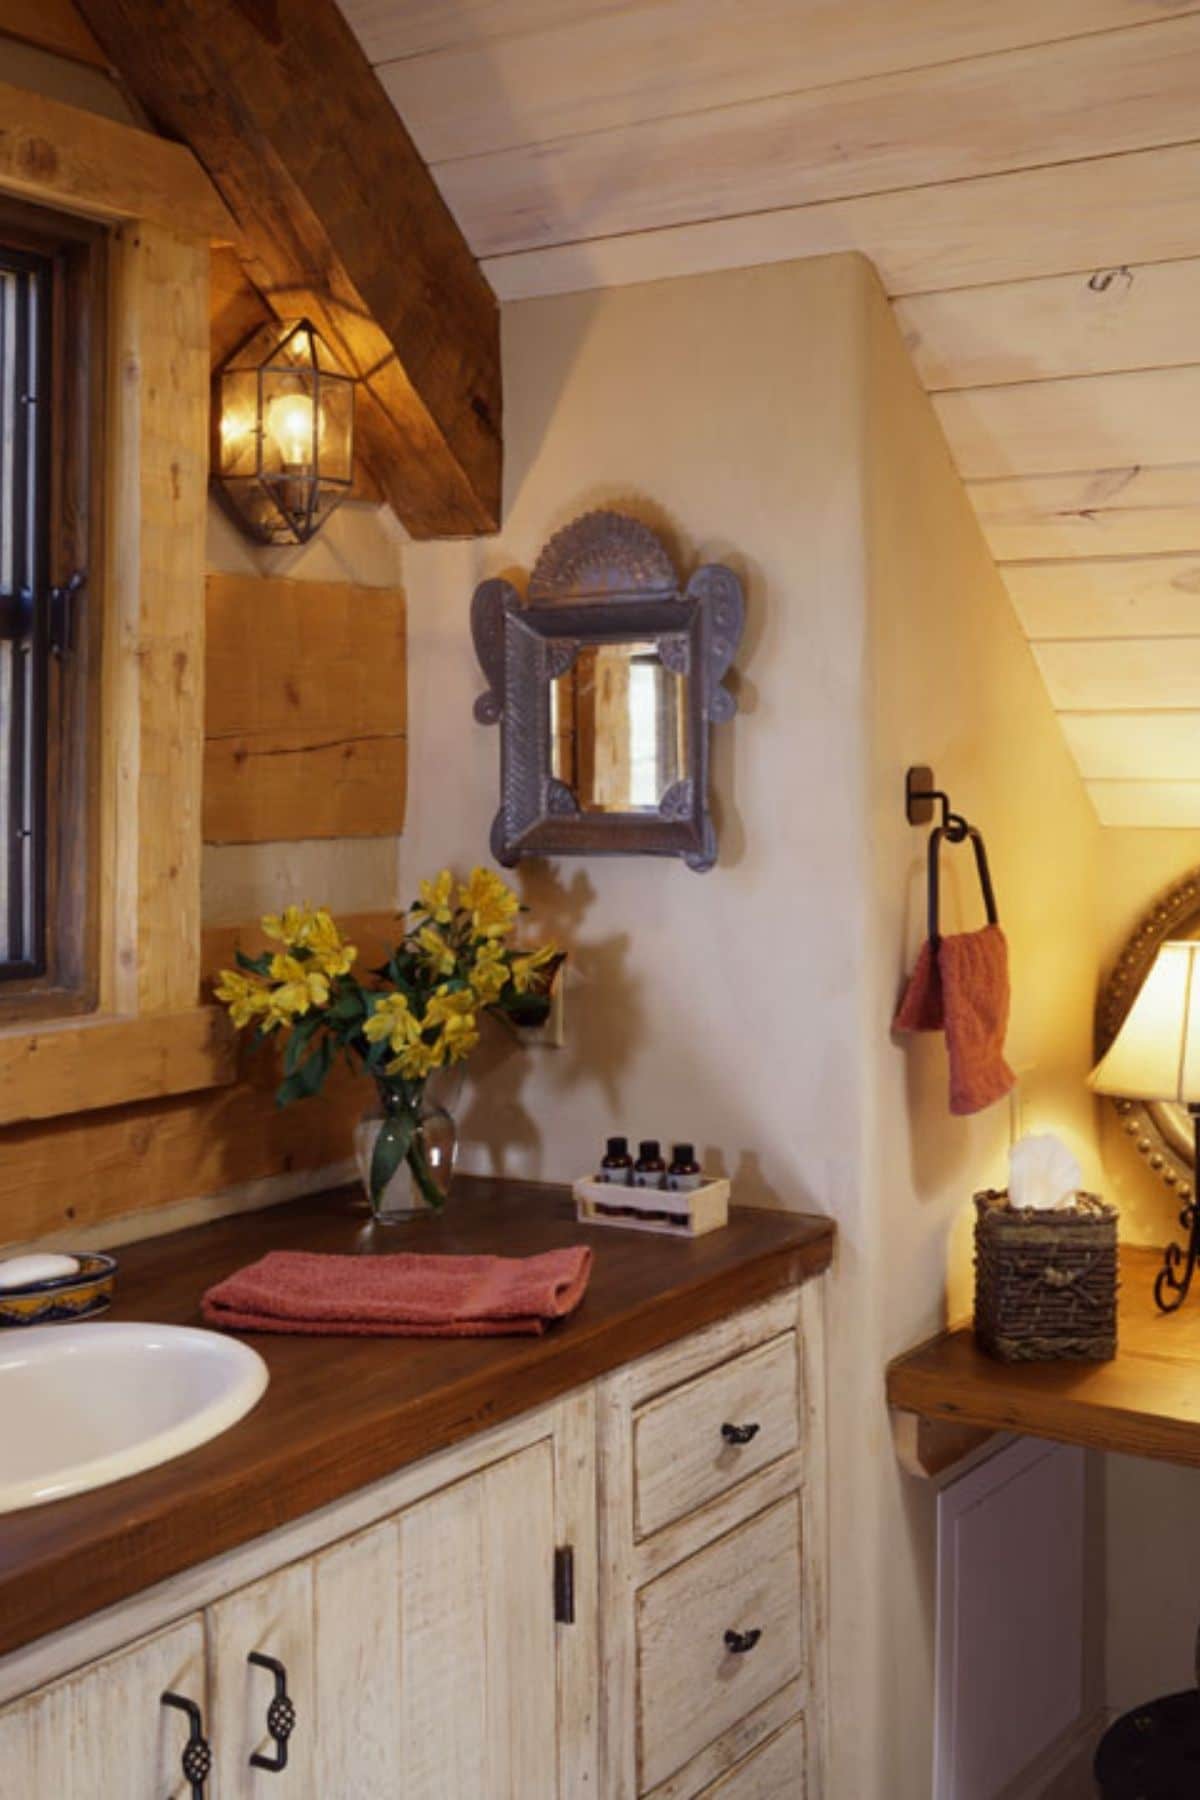 bathroom with vanity in light wood and dark wood countertop